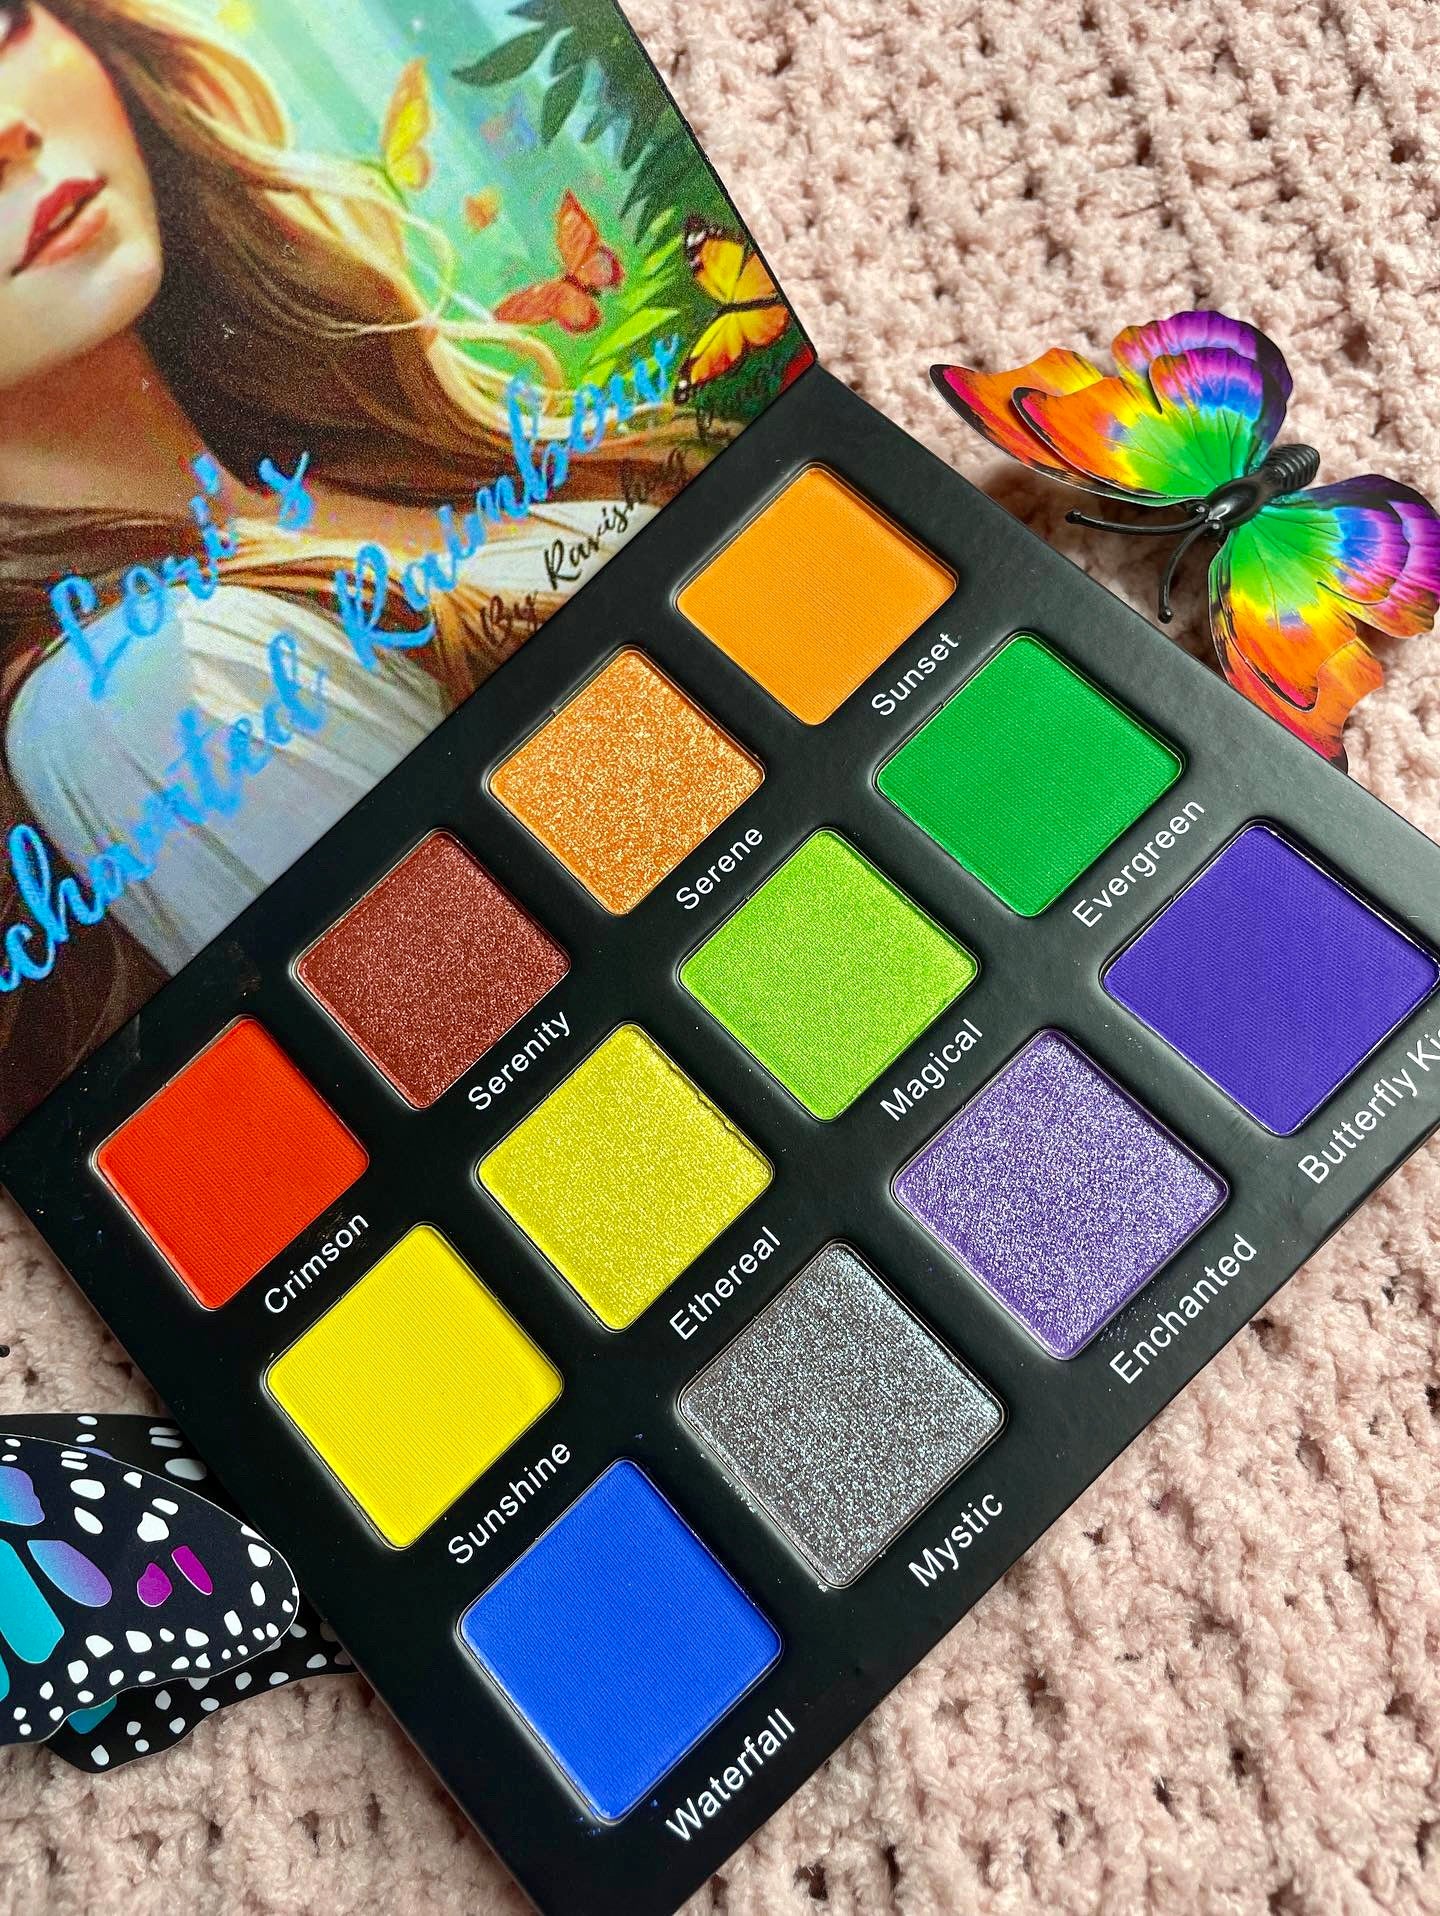 Lori’s Enchanted Rainbow Palette